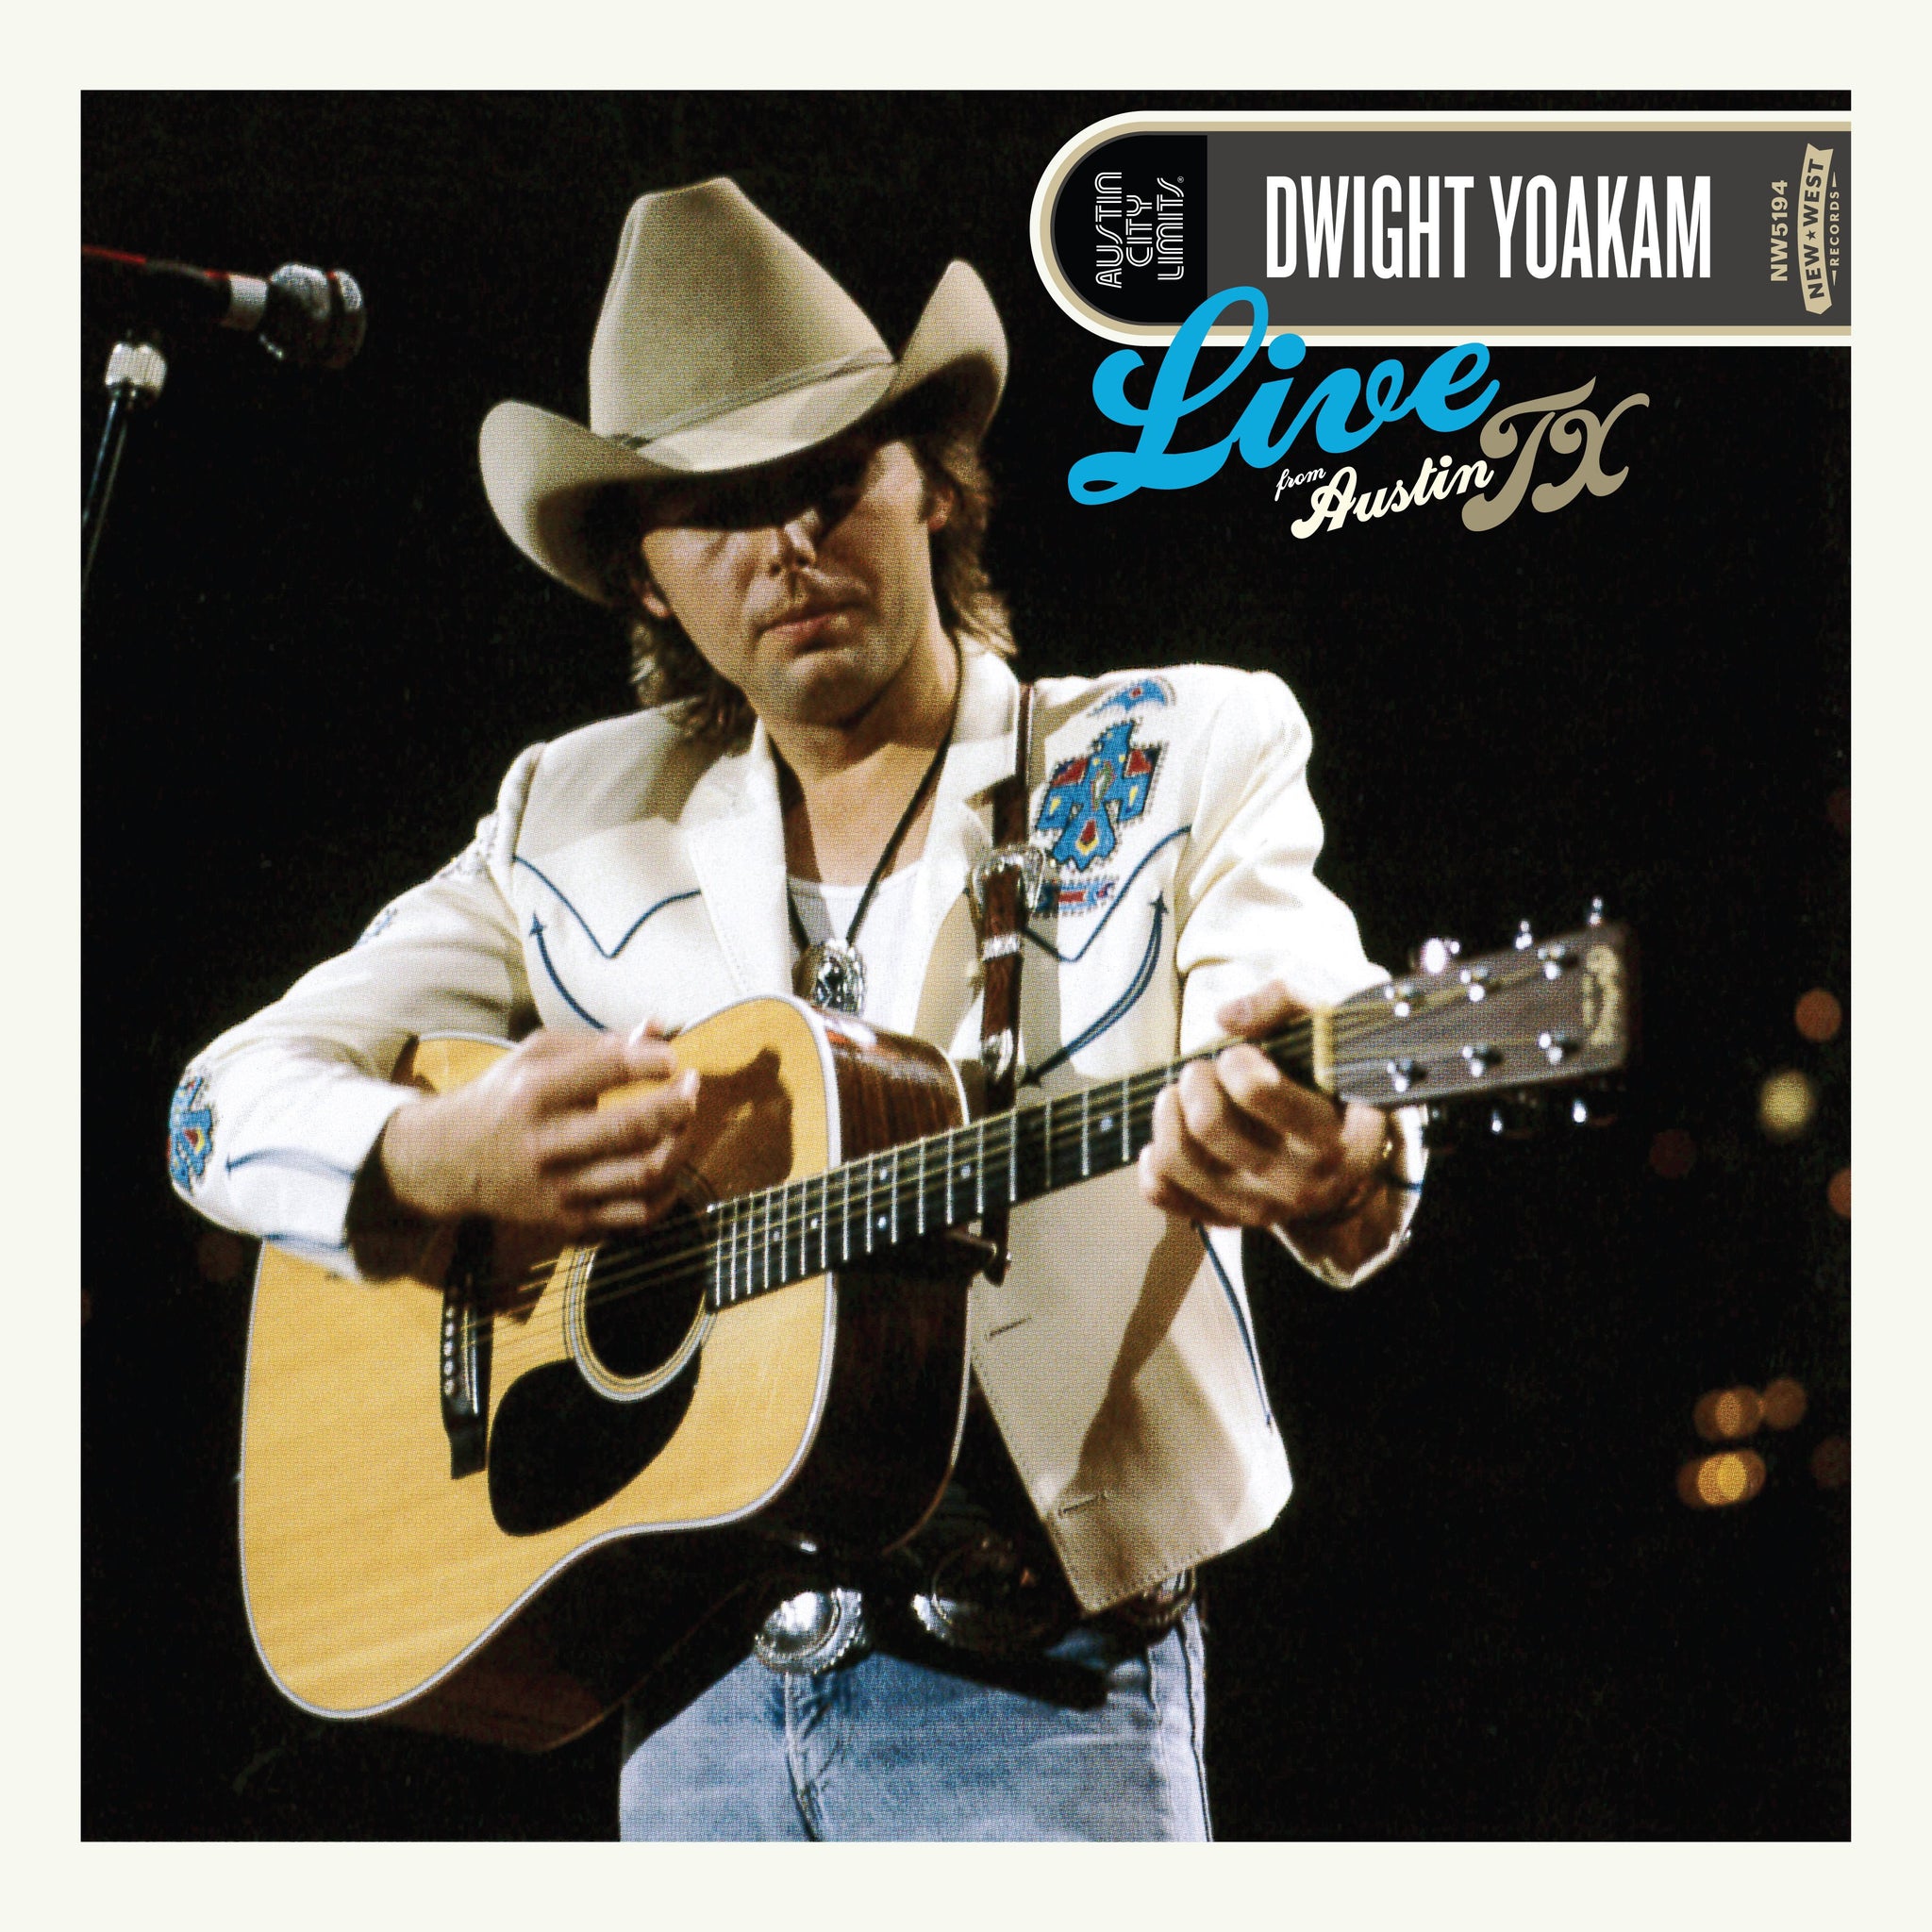 Dwight Yoakam - Live From Austin, TX [CD/DVD]